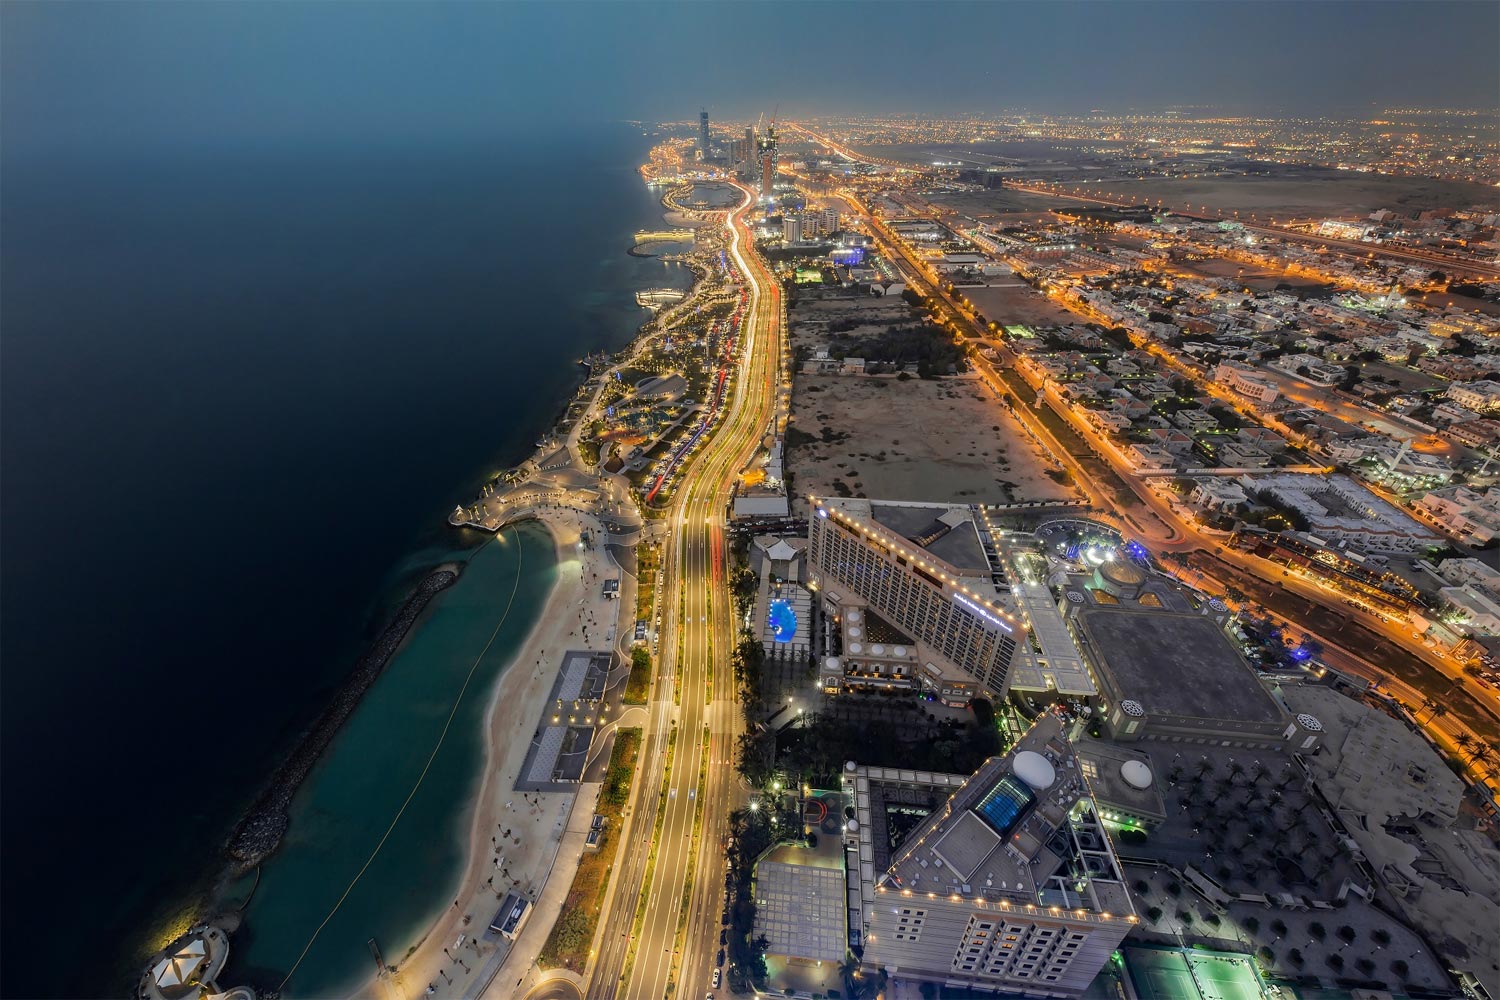 tourism in saudi arabia and its future development